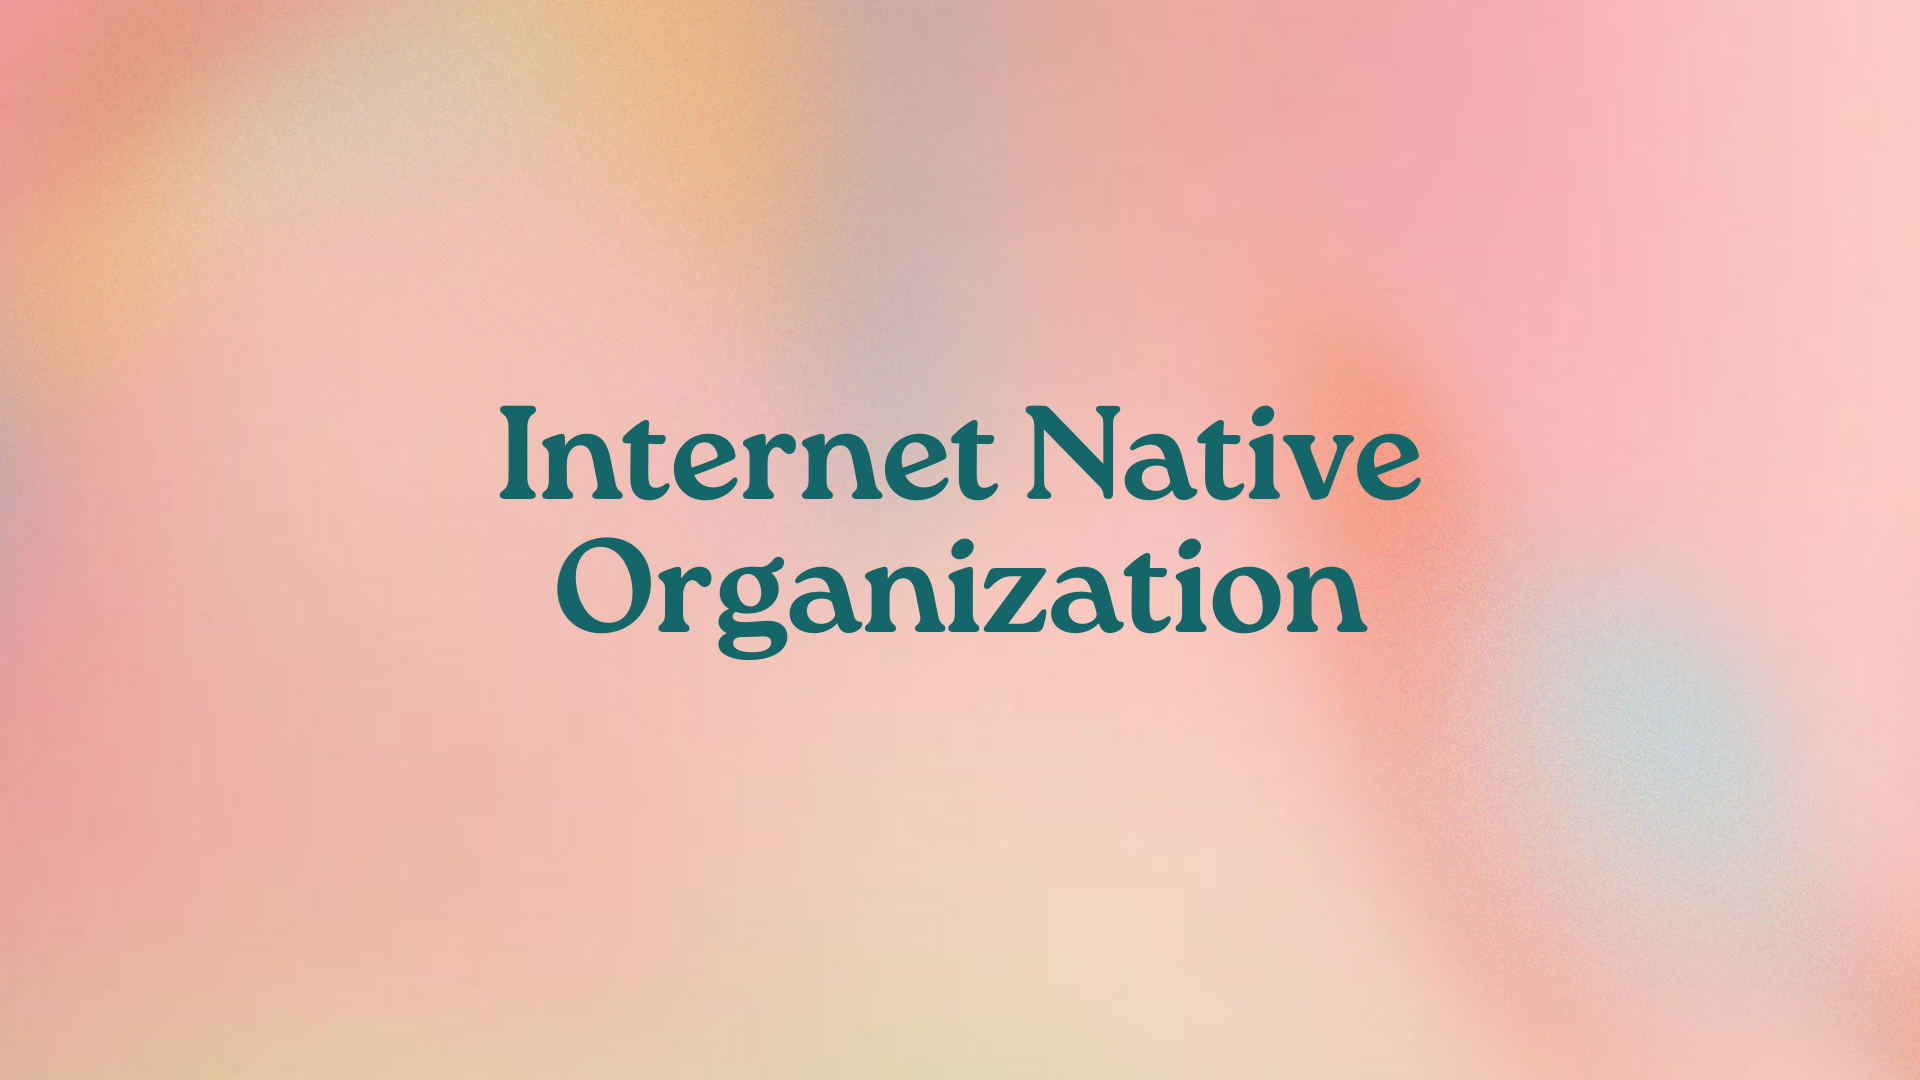 Internet Native Organization